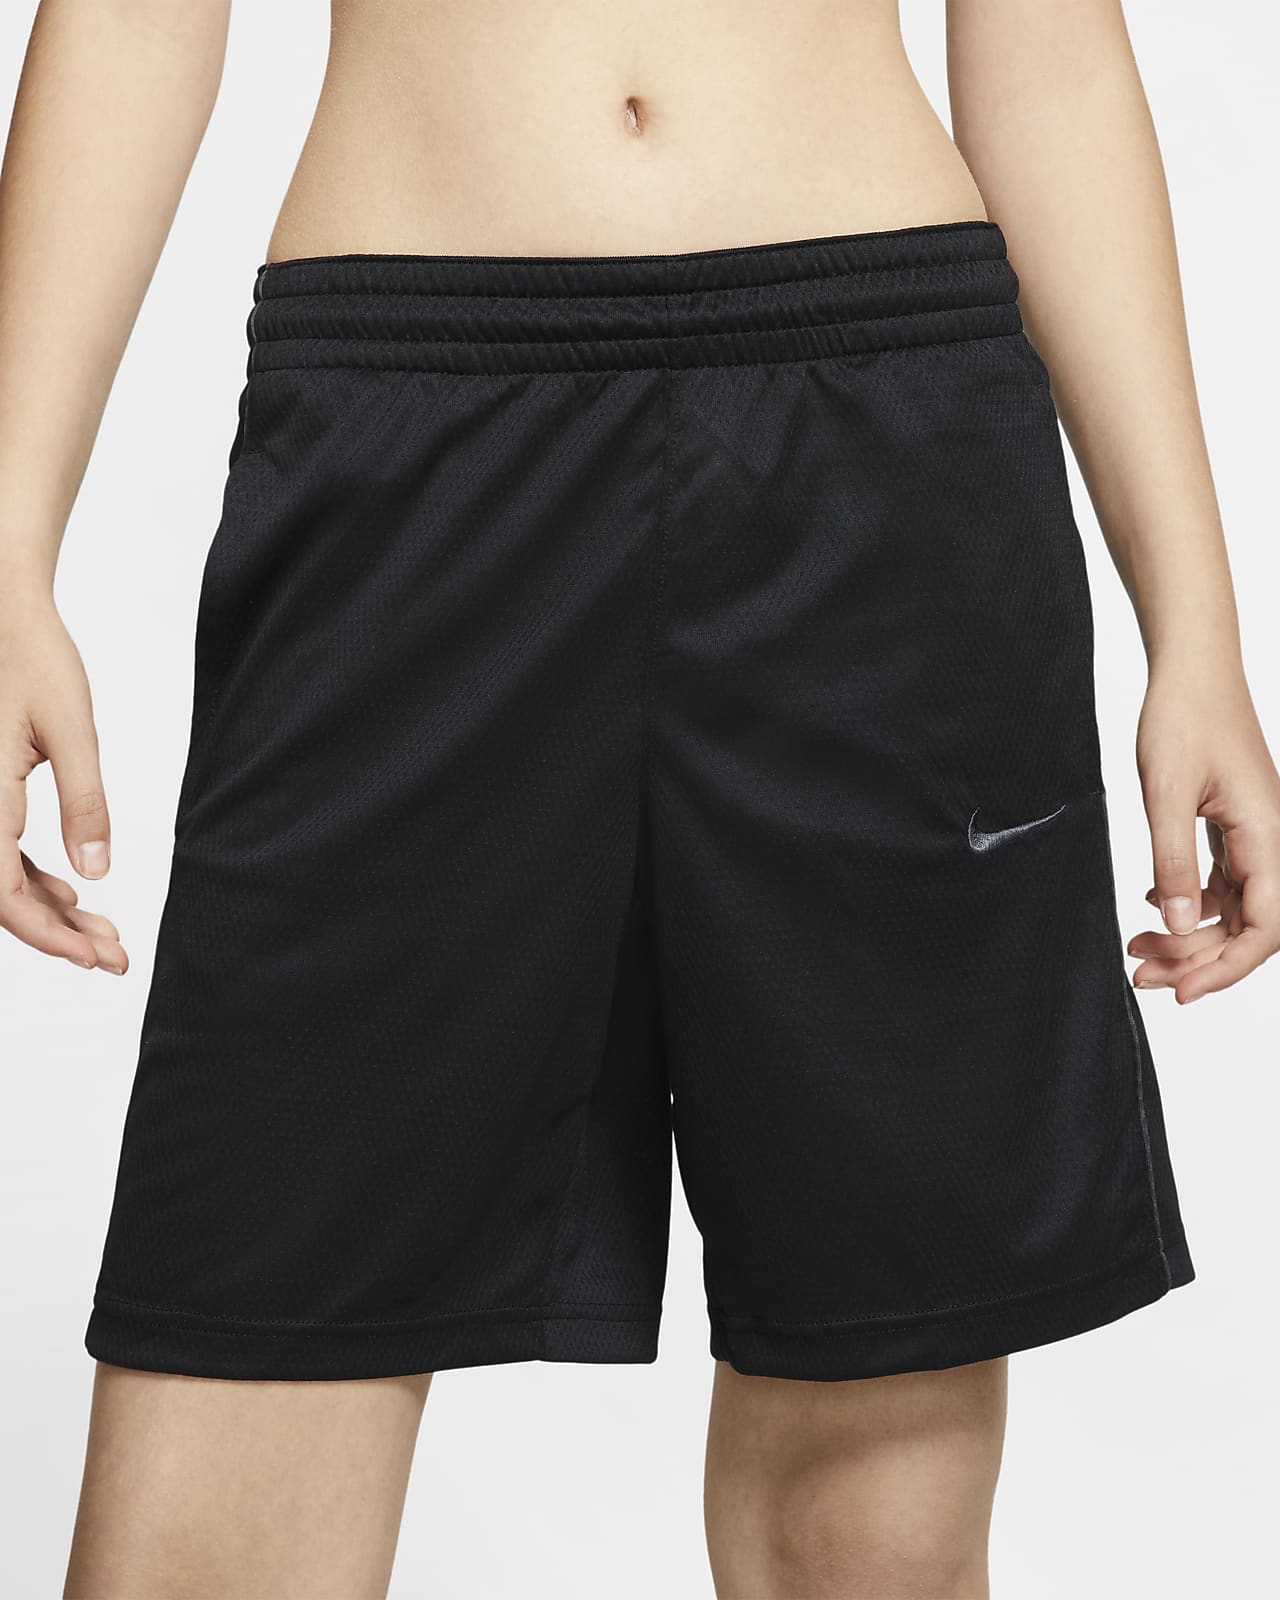 Basketball Shorts, Nike College Spotlight (Oregon State) Men's ...